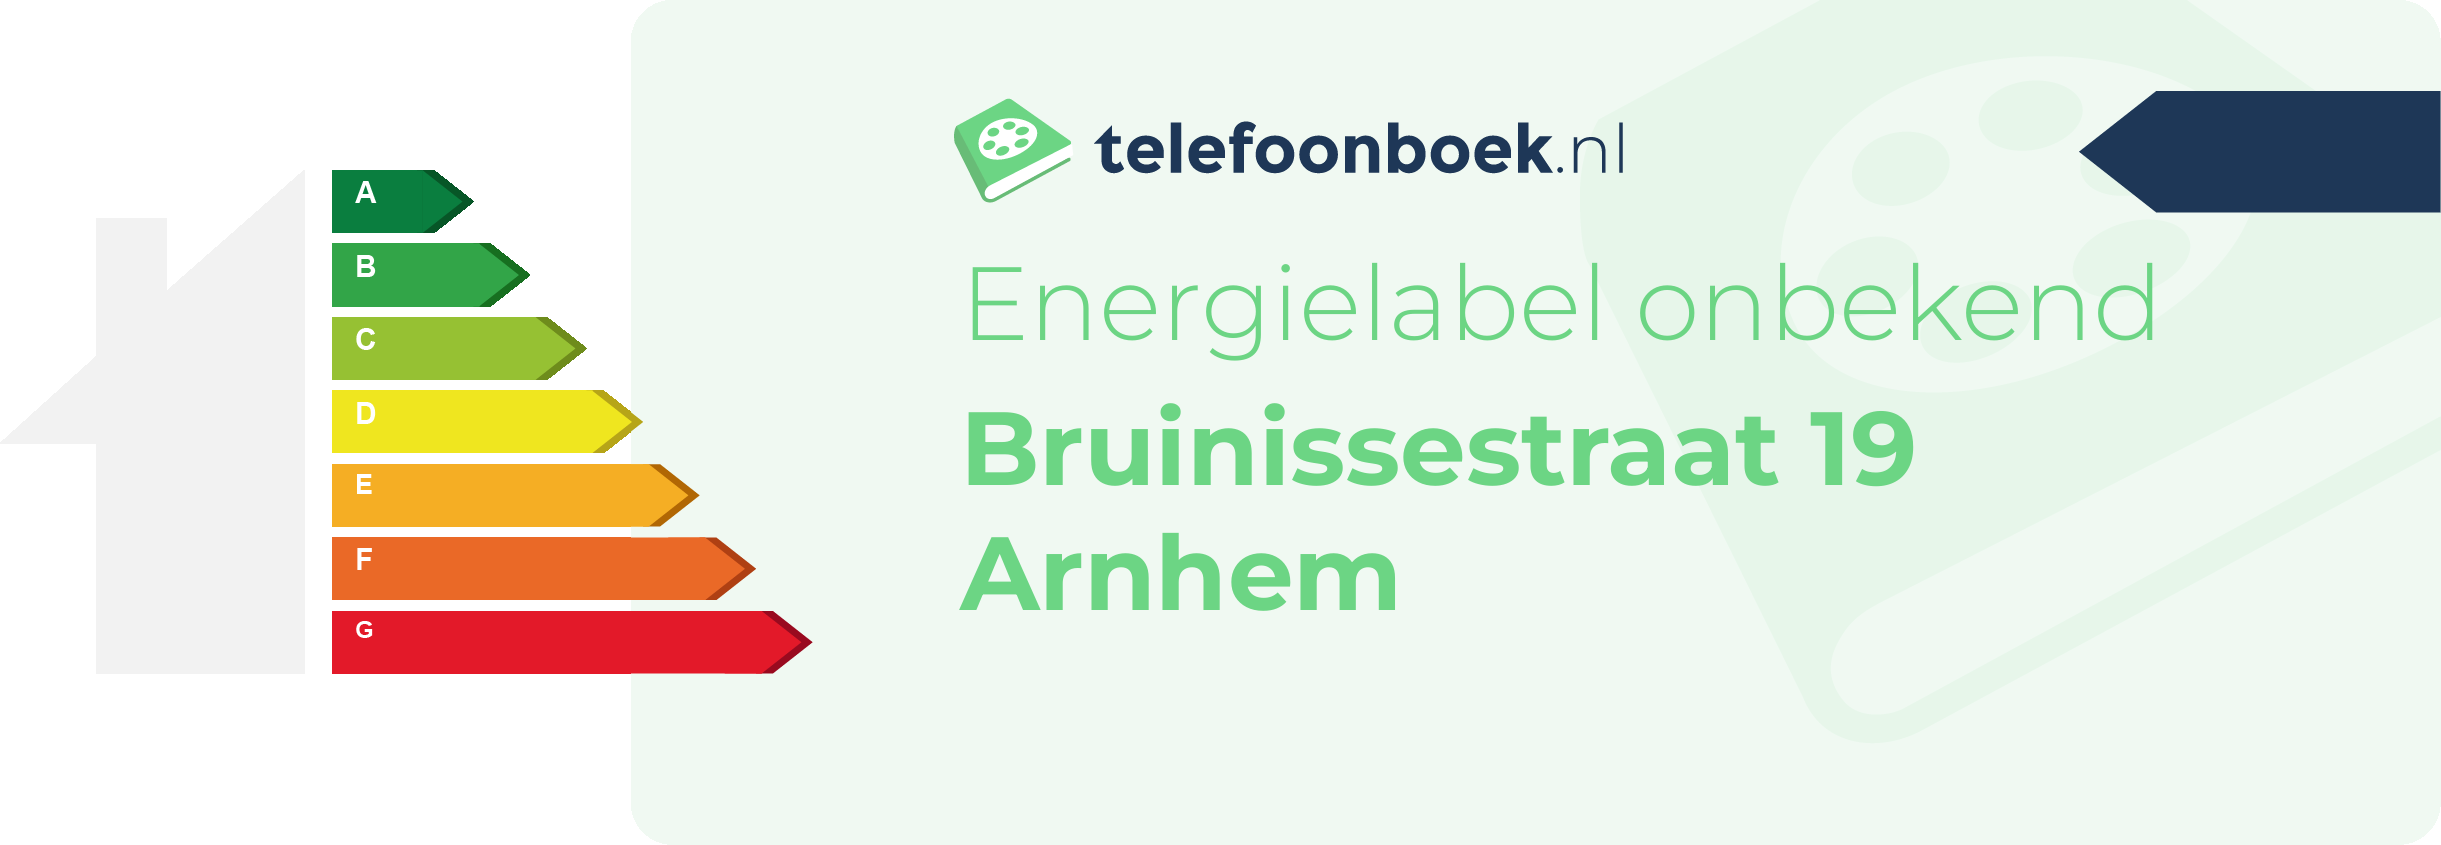 Energielabel Bruinissestraat 19 Arnhem